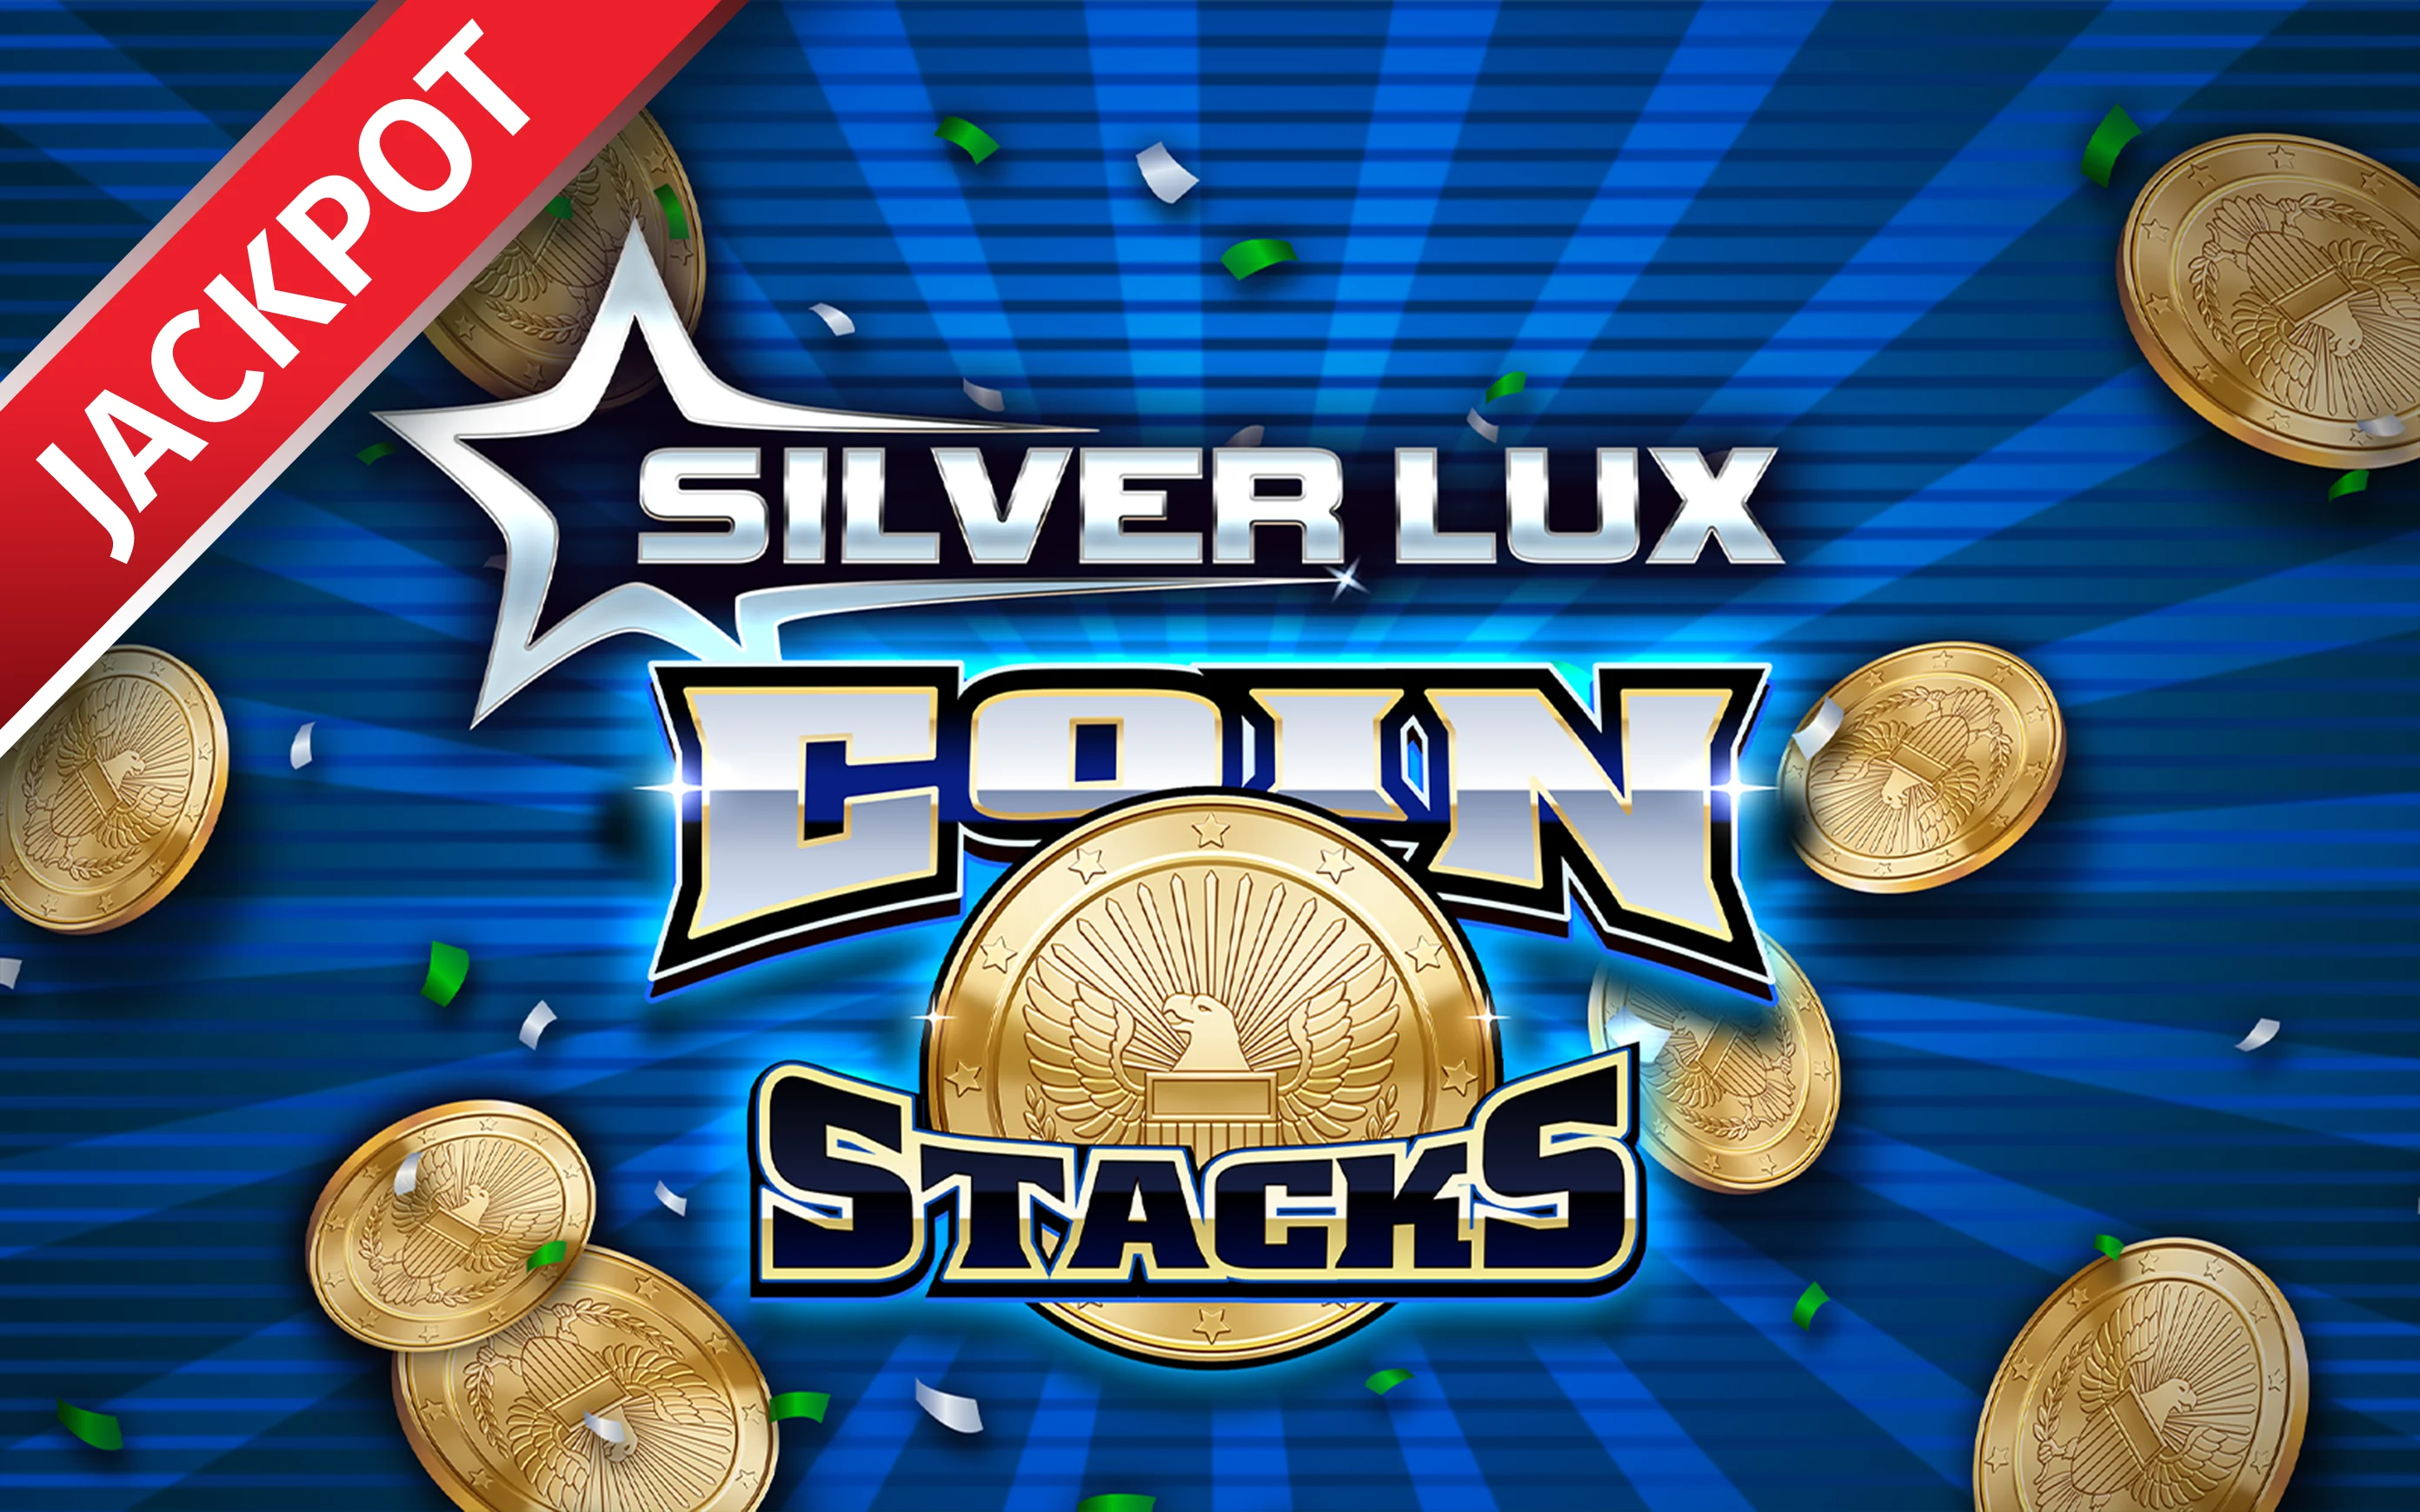 Spil Silver Lux – Coin Stacks på Starcasino.be online kasino
